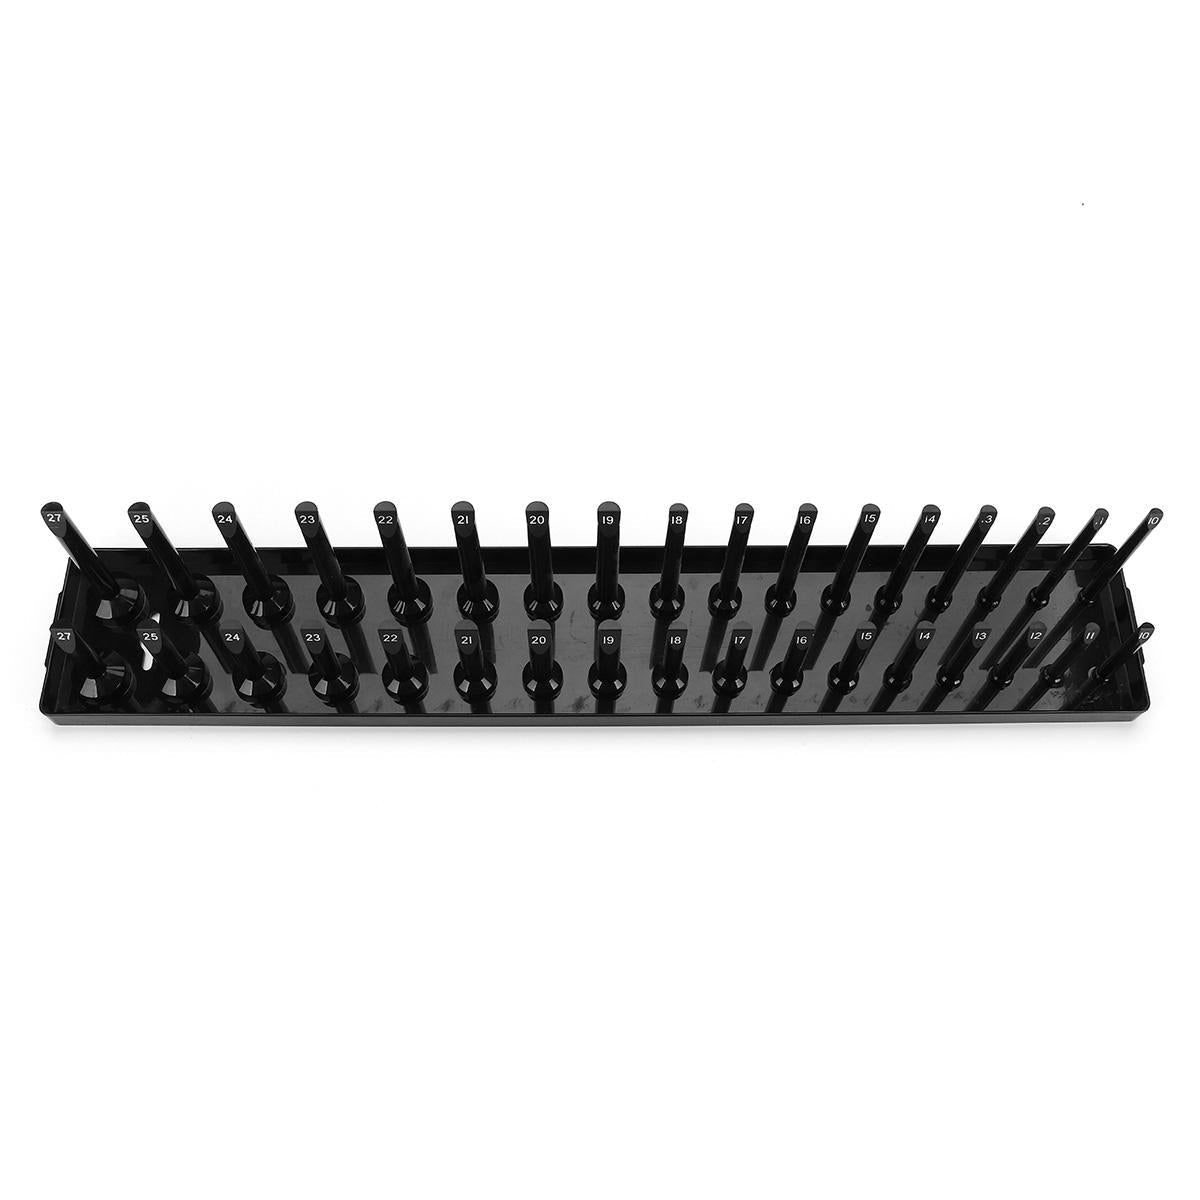 1/2 Inch Metric 34 Slot Socket Rack Storage Rail Tray Holder Shelf Organizer Machinery Parts